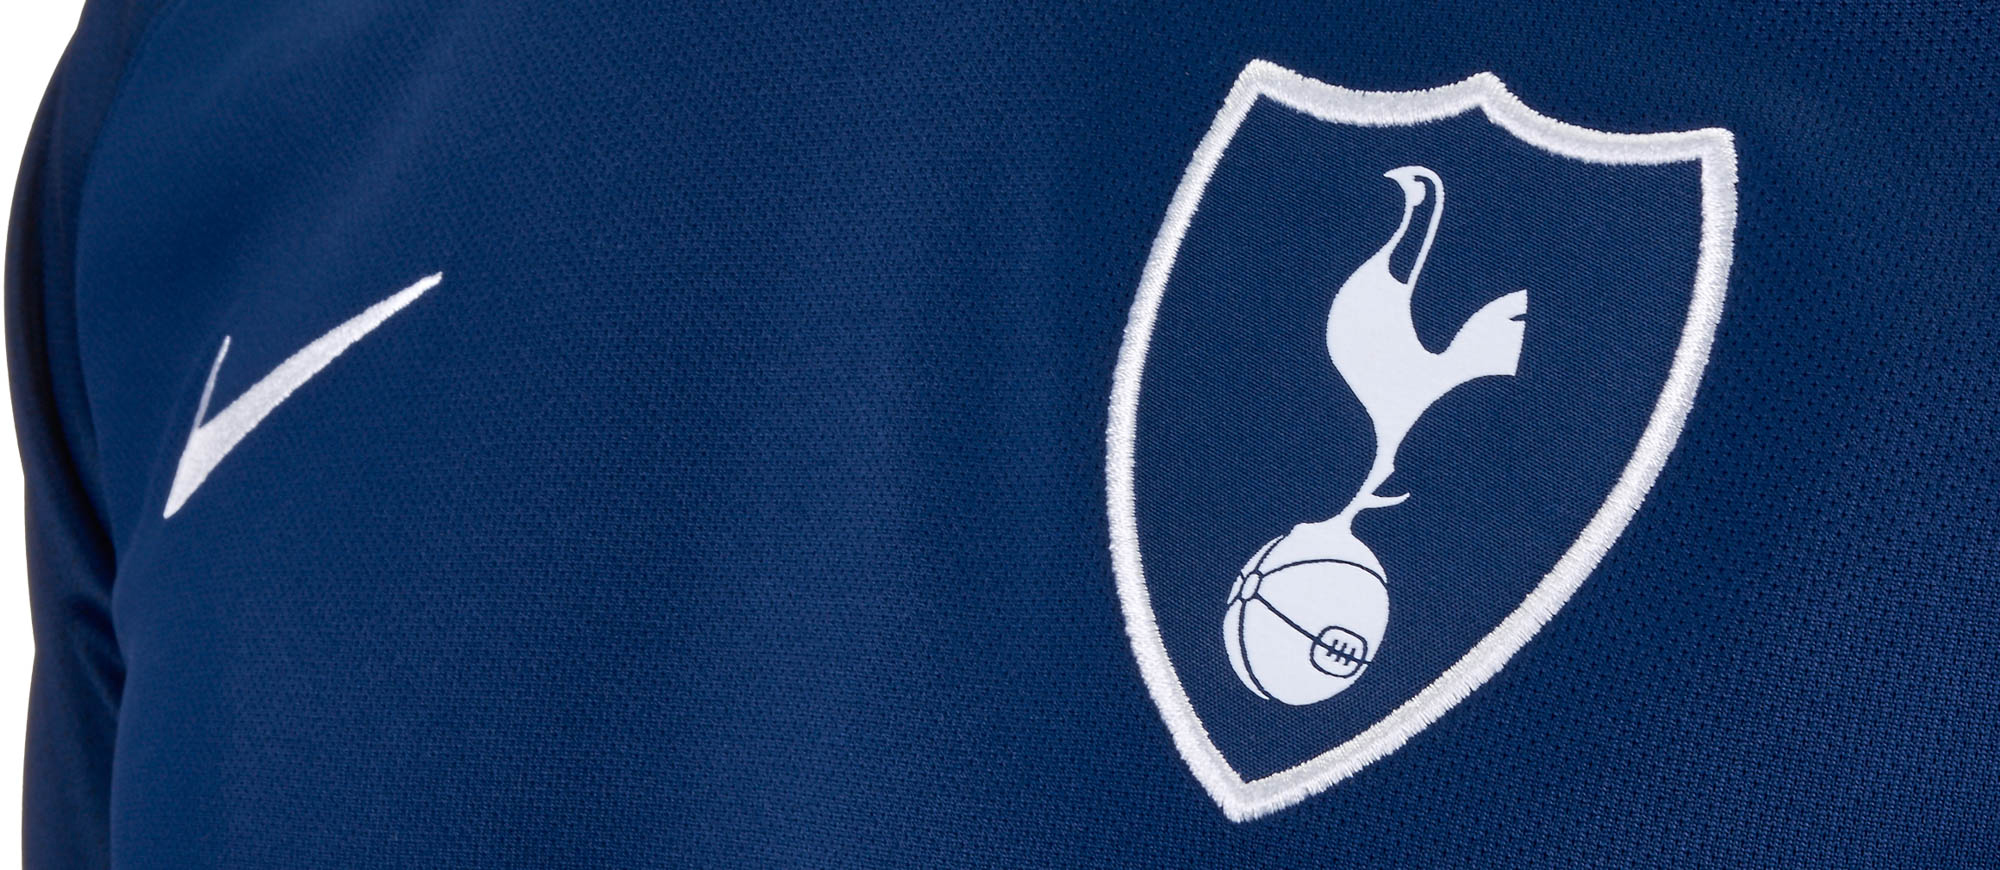 Harry Kane and Dele Alli model Tottenham's new Nike kits for 2017/18 season, Football News